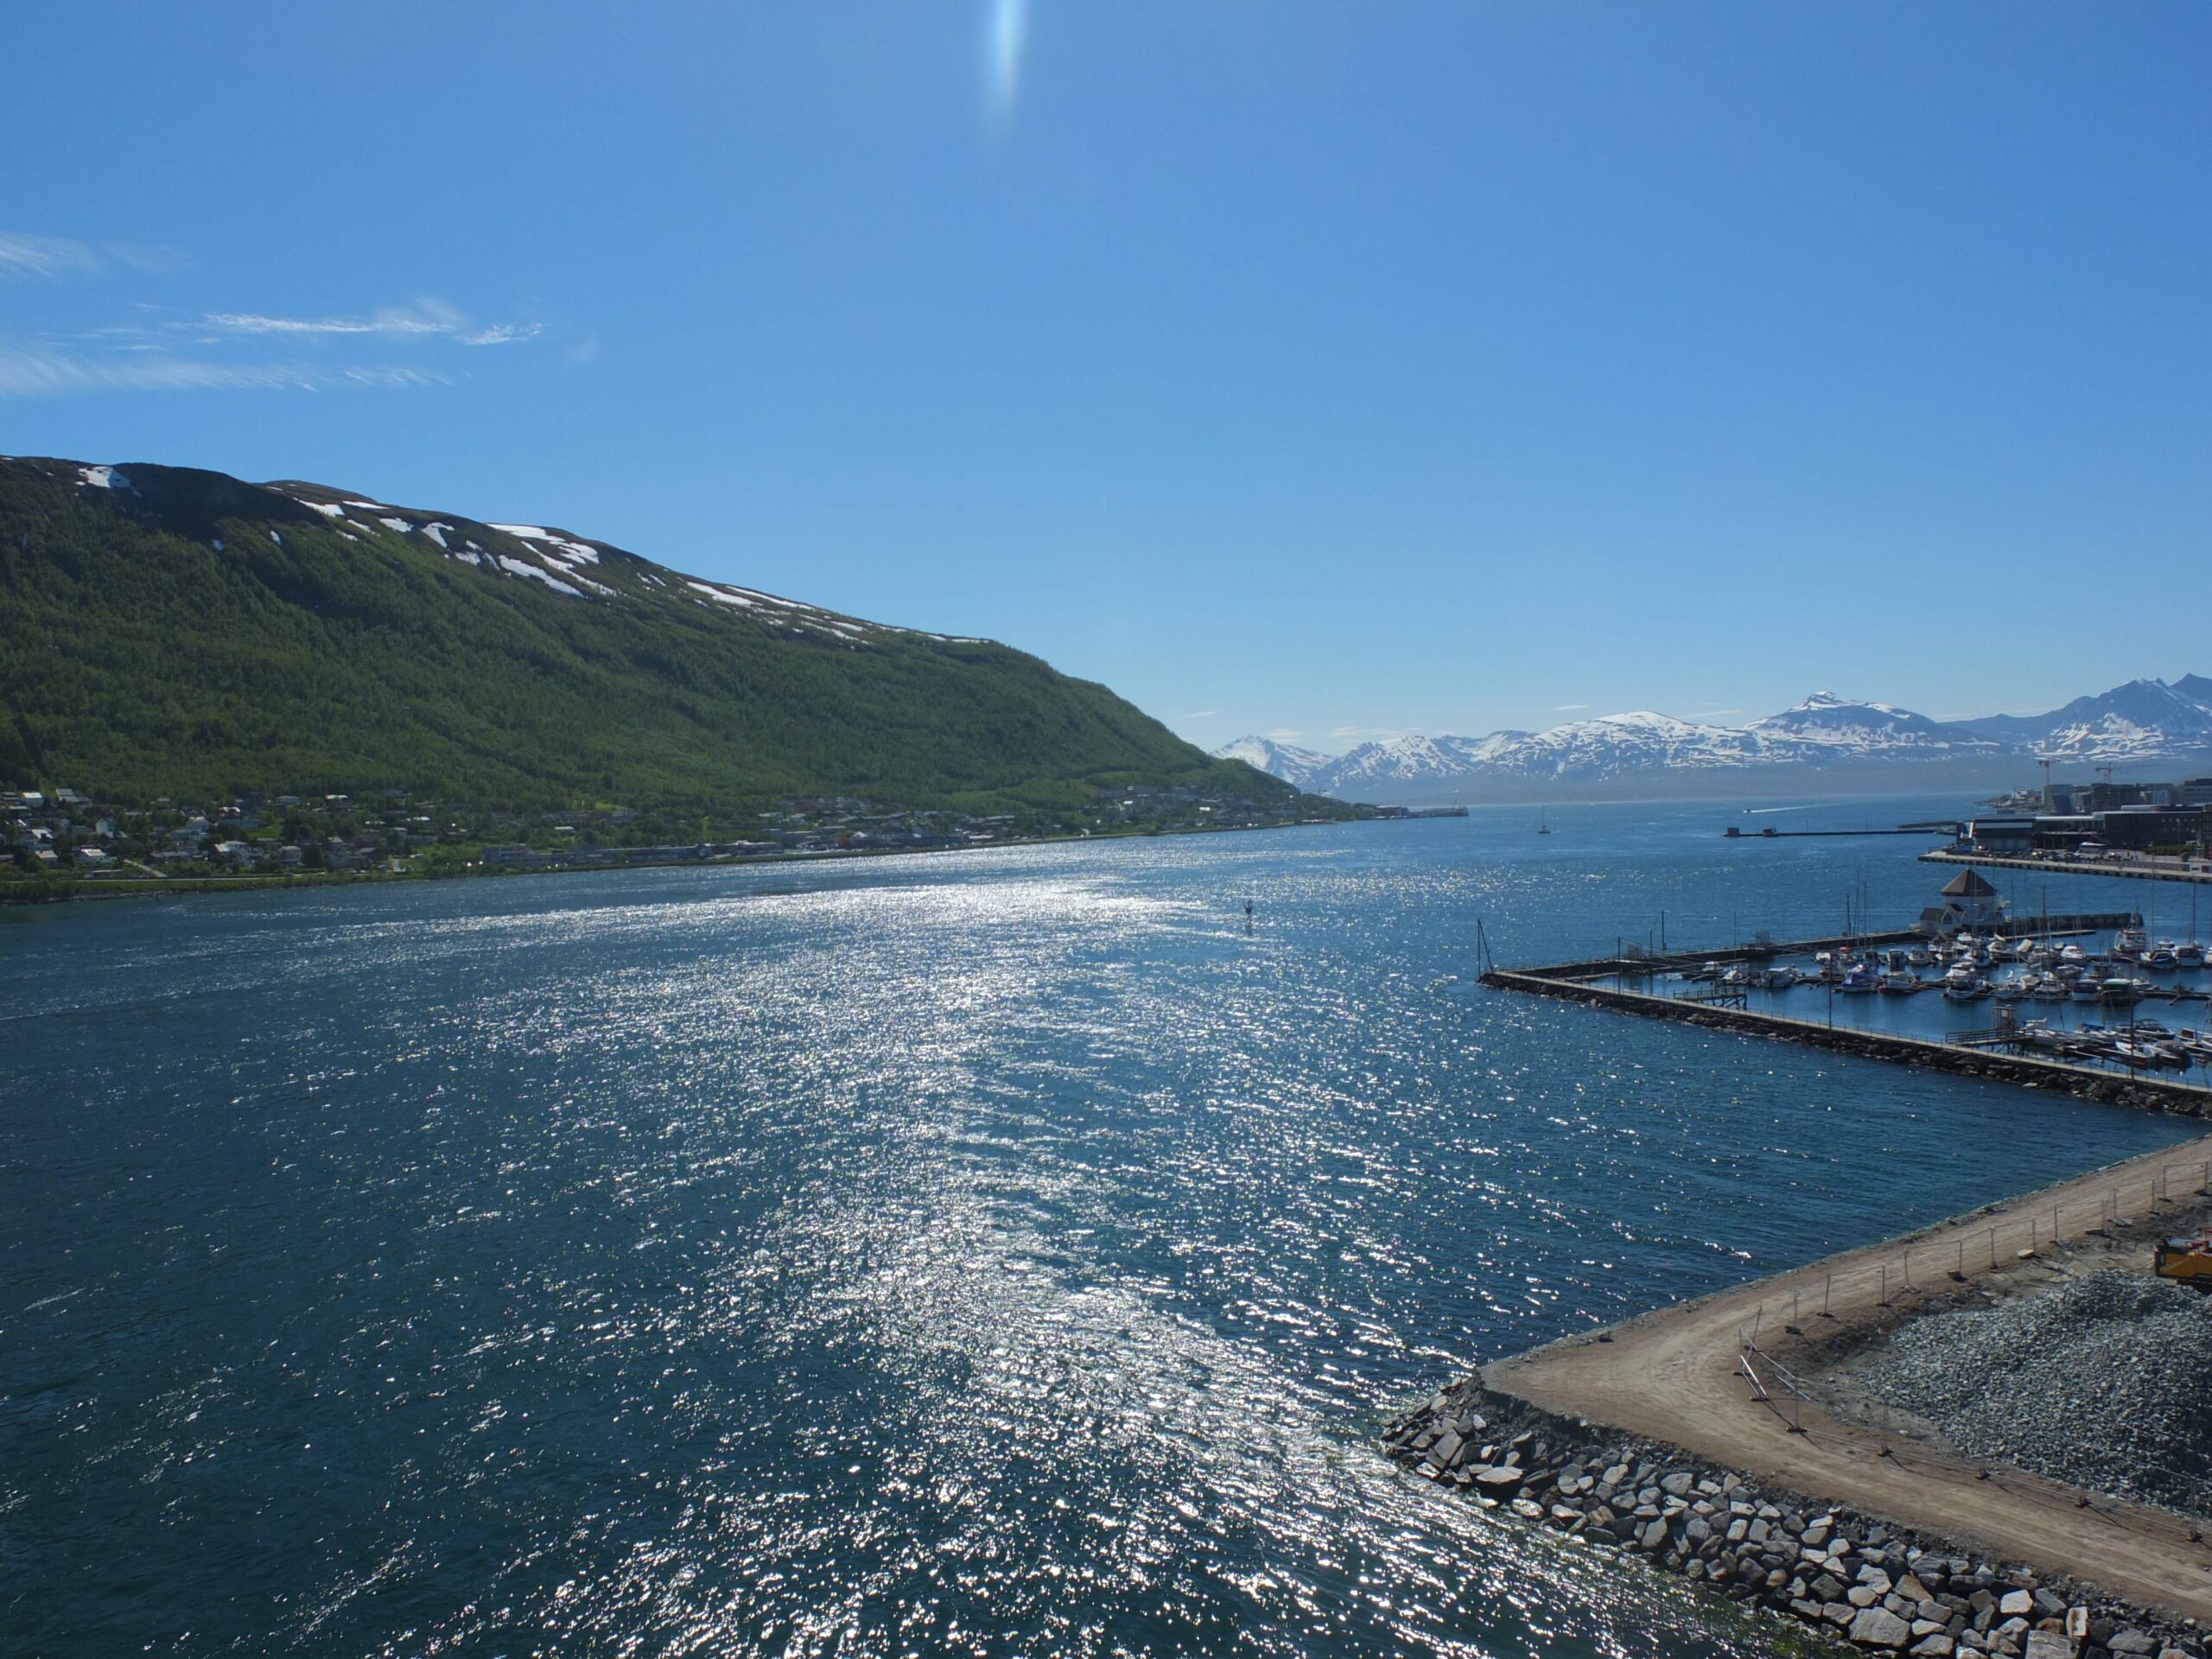 Ferientraum Reisen Norwegische Fjorde - Naturlandschaften pur